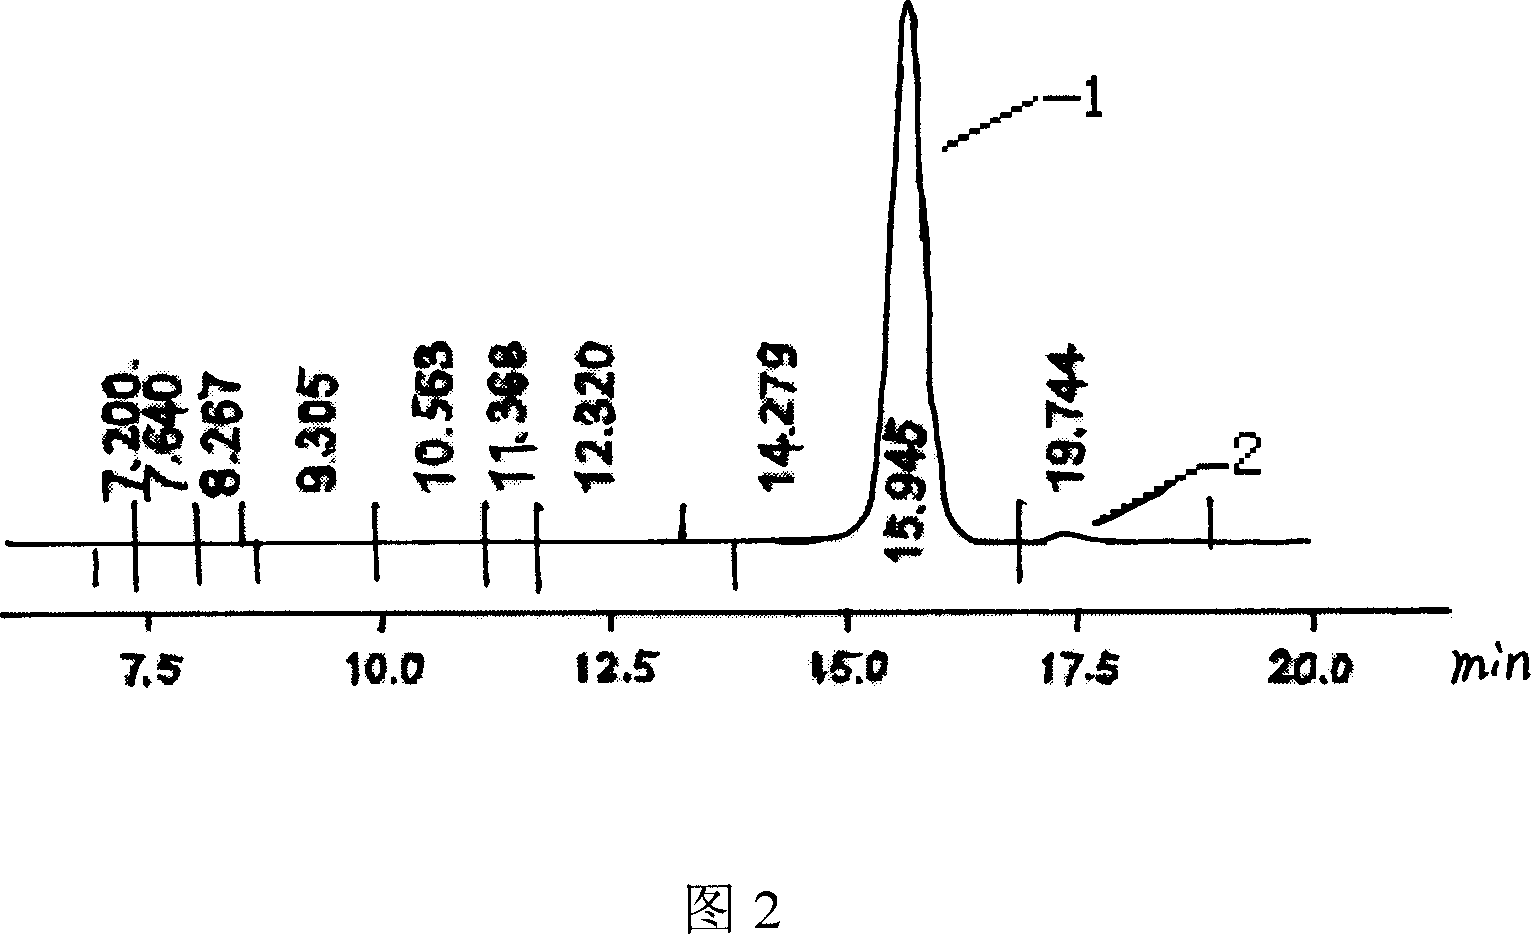 Process for preparing 6 alpha-methyl hydroprednisone